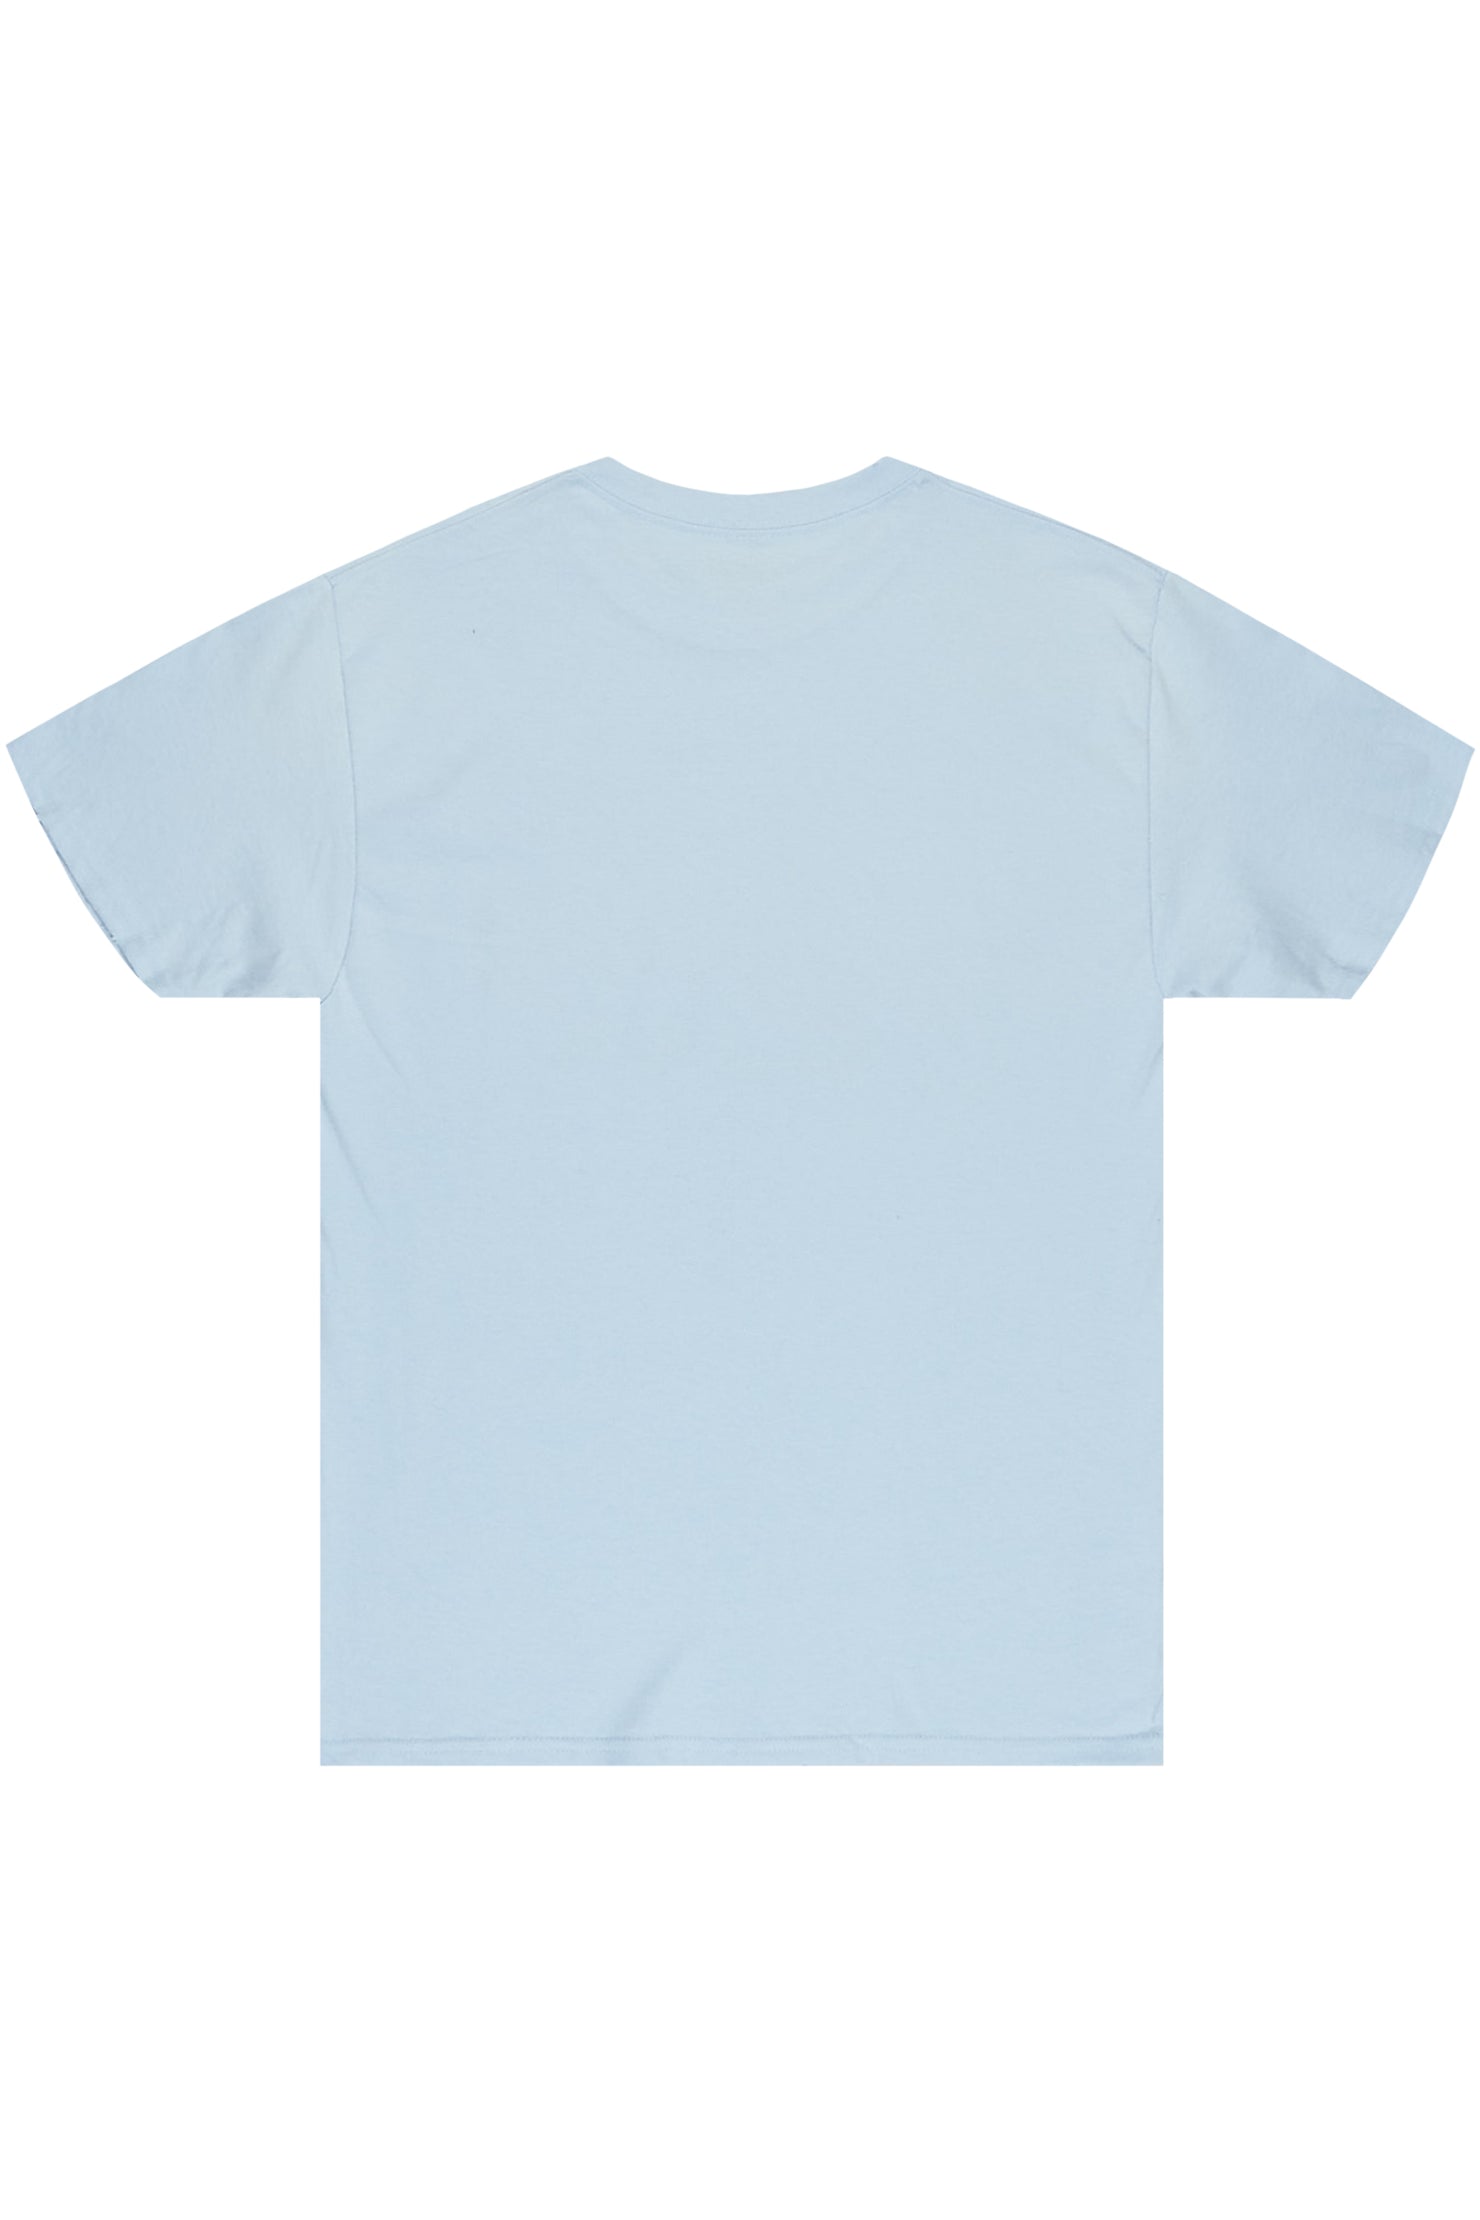 Zustrand Light Blue Graphic T-Shirt